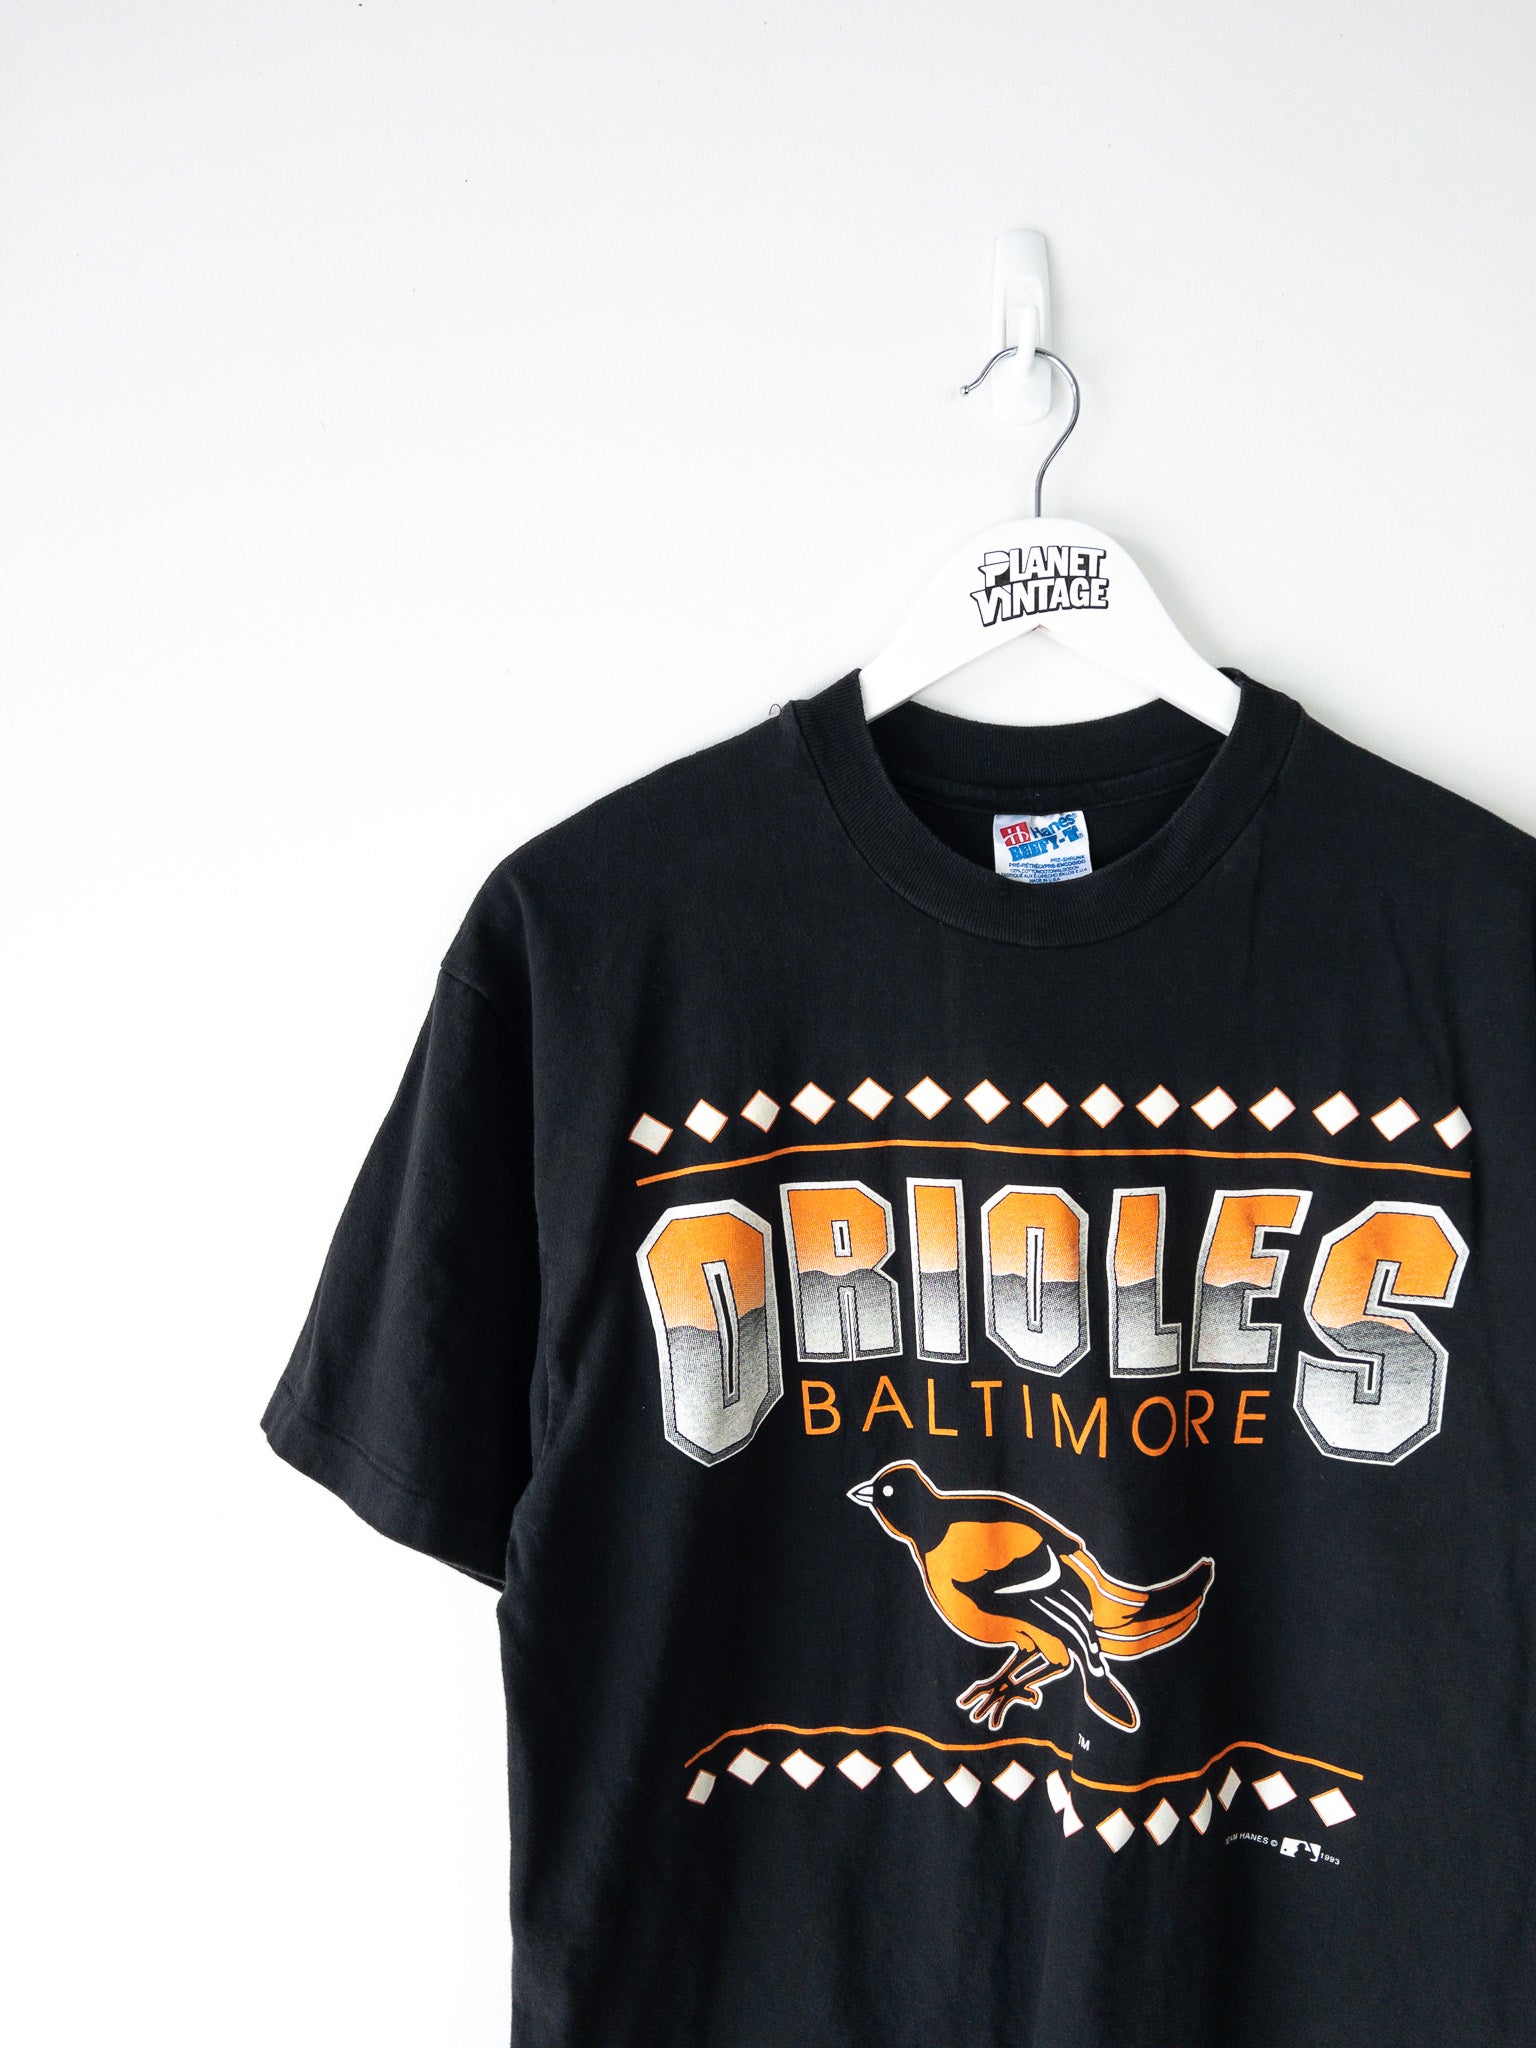 Vintage Baltimore Orioles 1993 Tee (L)